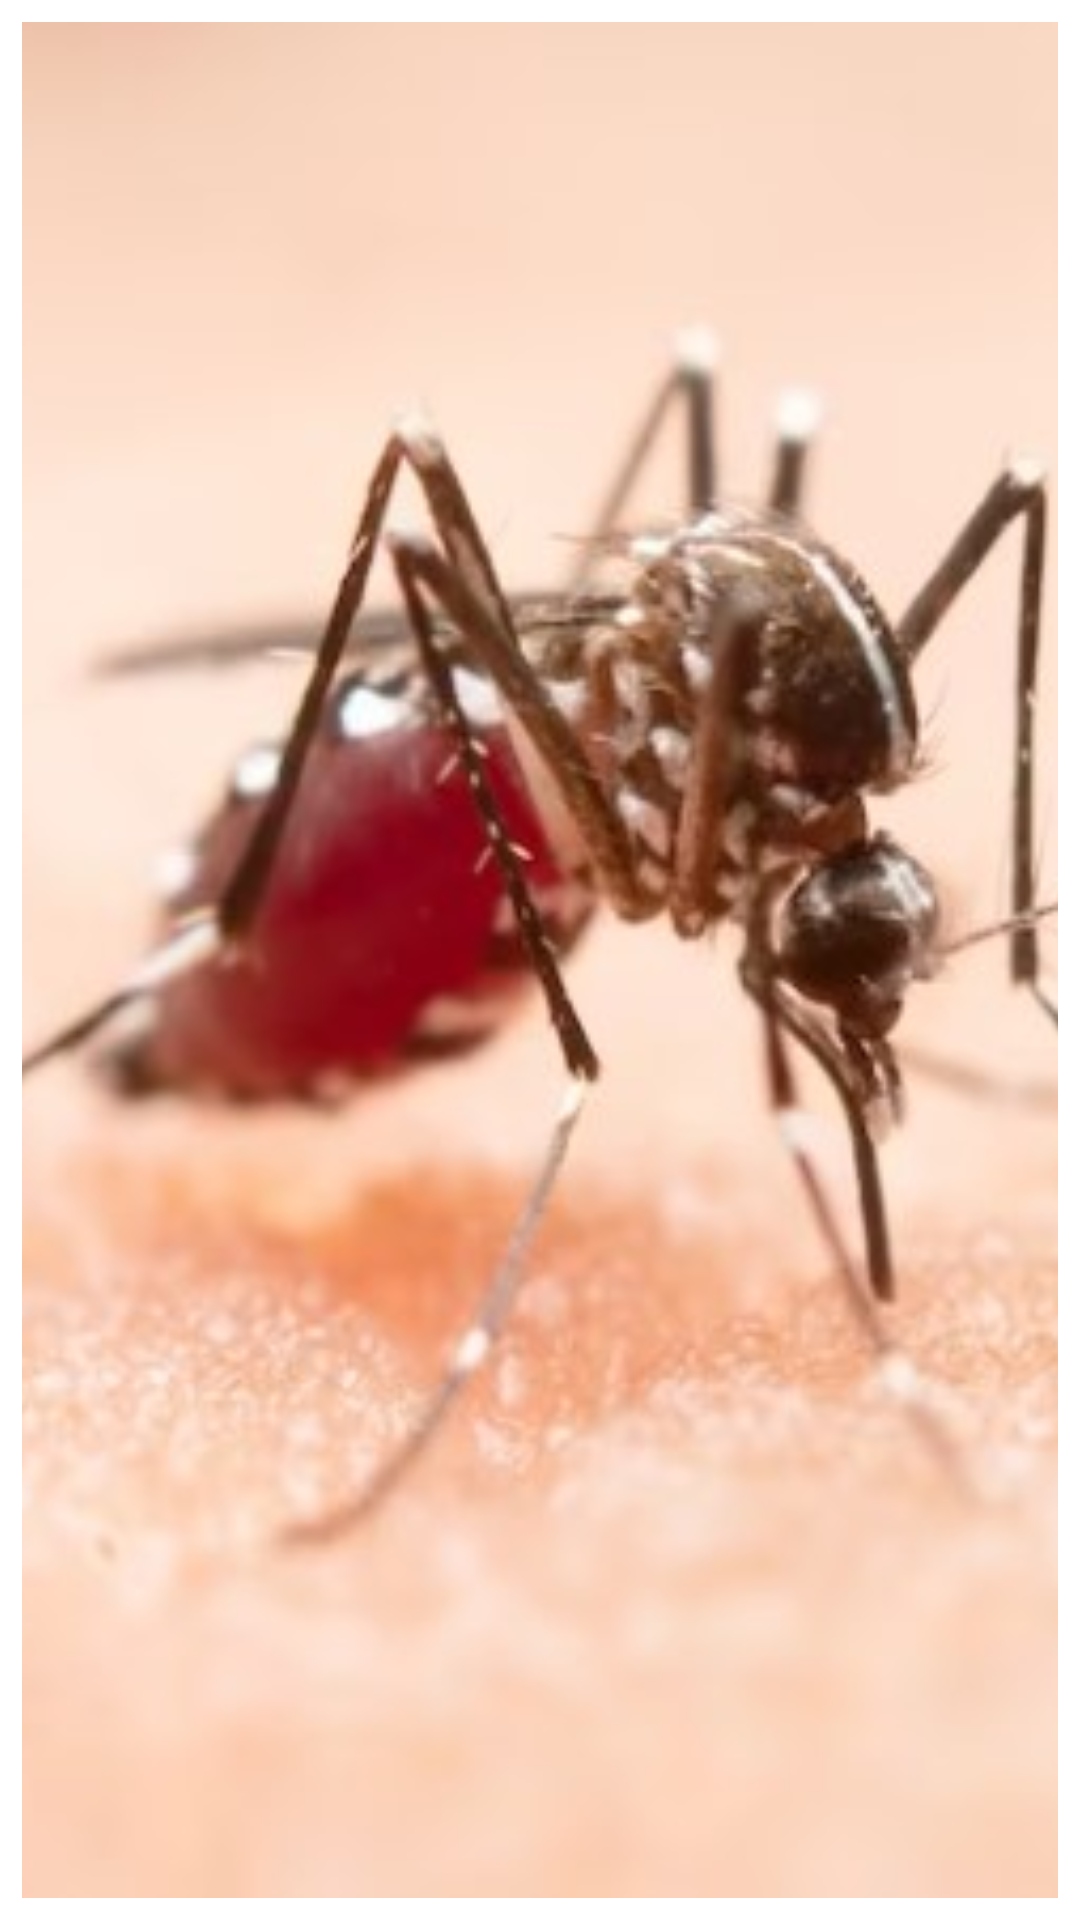 Signs and symptoms of Zika Virus
